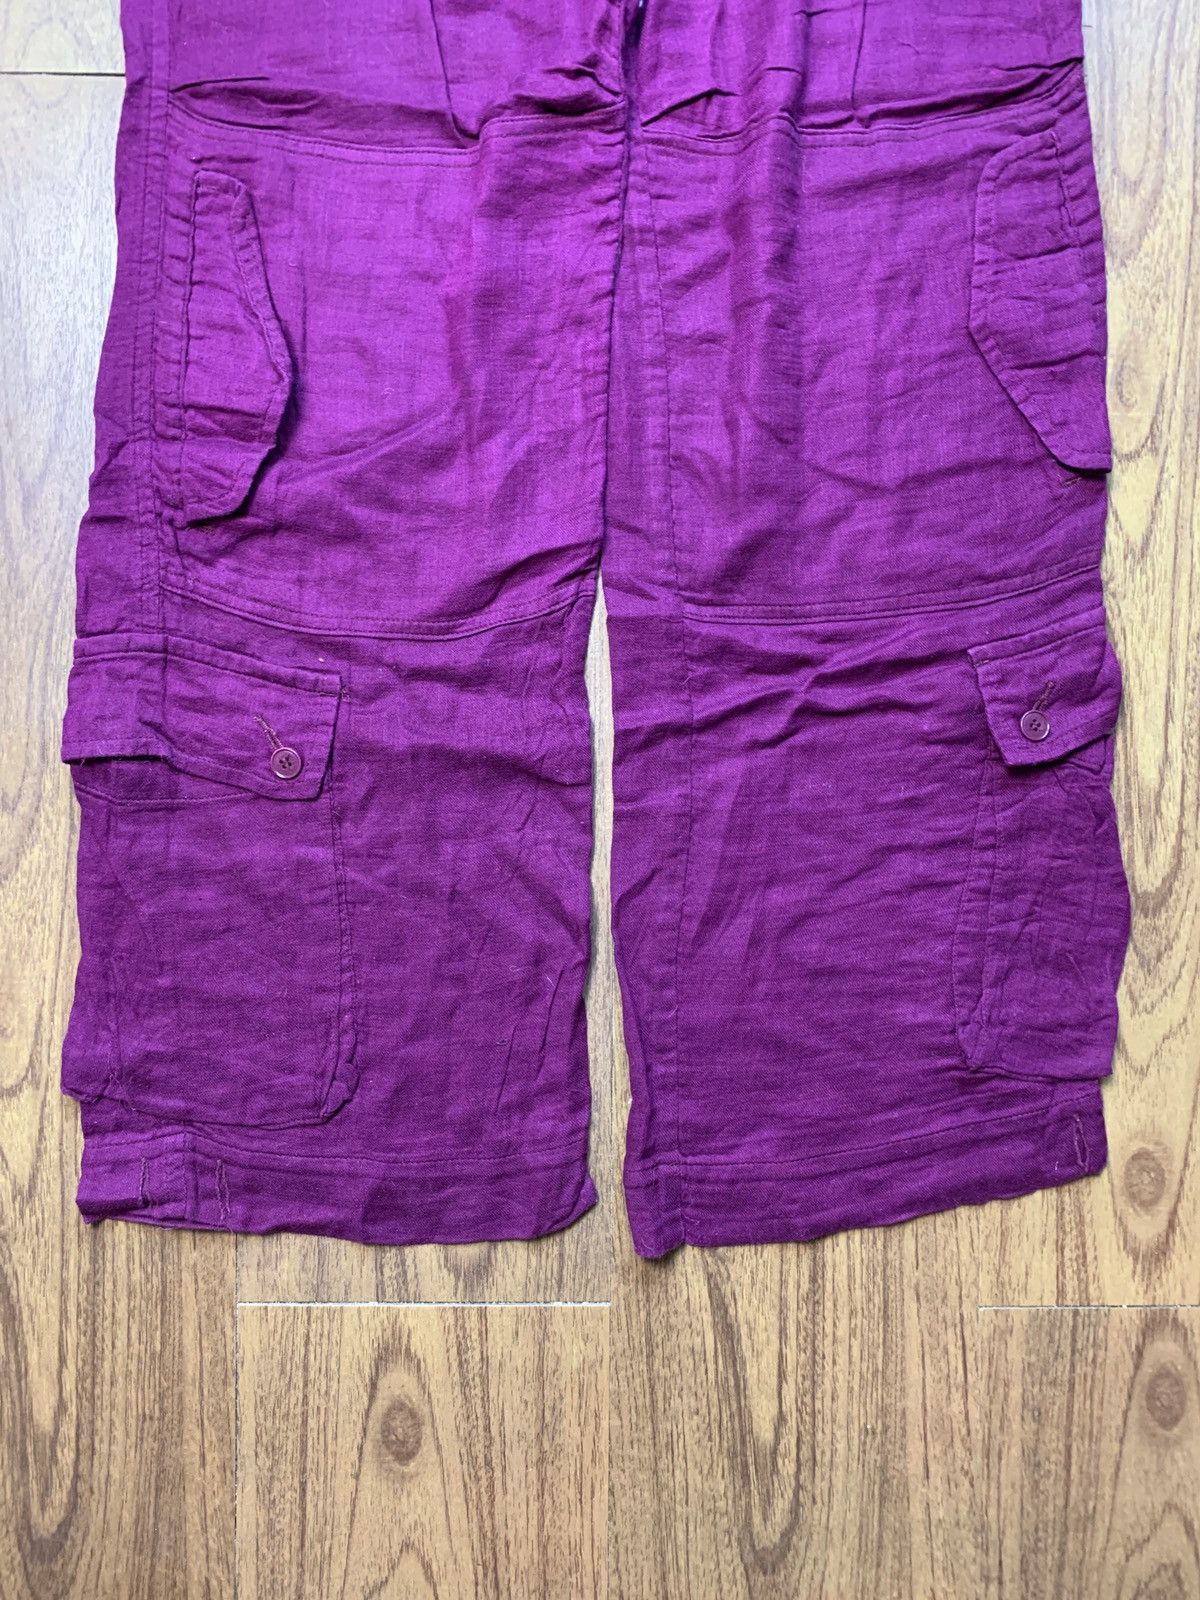 Issey Miyake Multi Pocket Light Cotton Cargo Pants Size US 32 / EU 48 - 4 Thumbnail